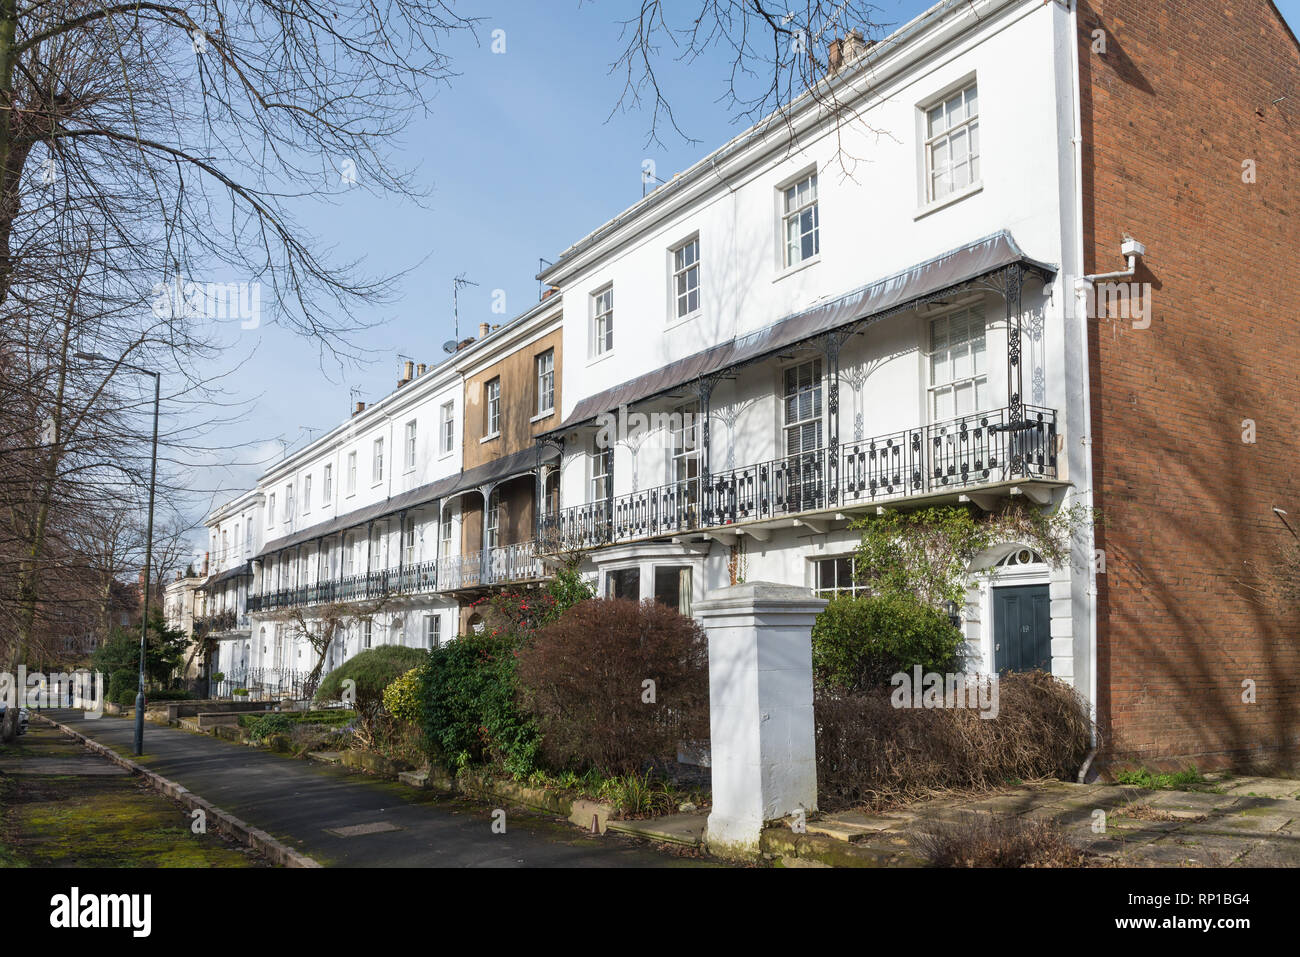 Row of smart white Regency villas or houses in Binswood Avenue, Leamington Spa, Warwickshire Stock Photo